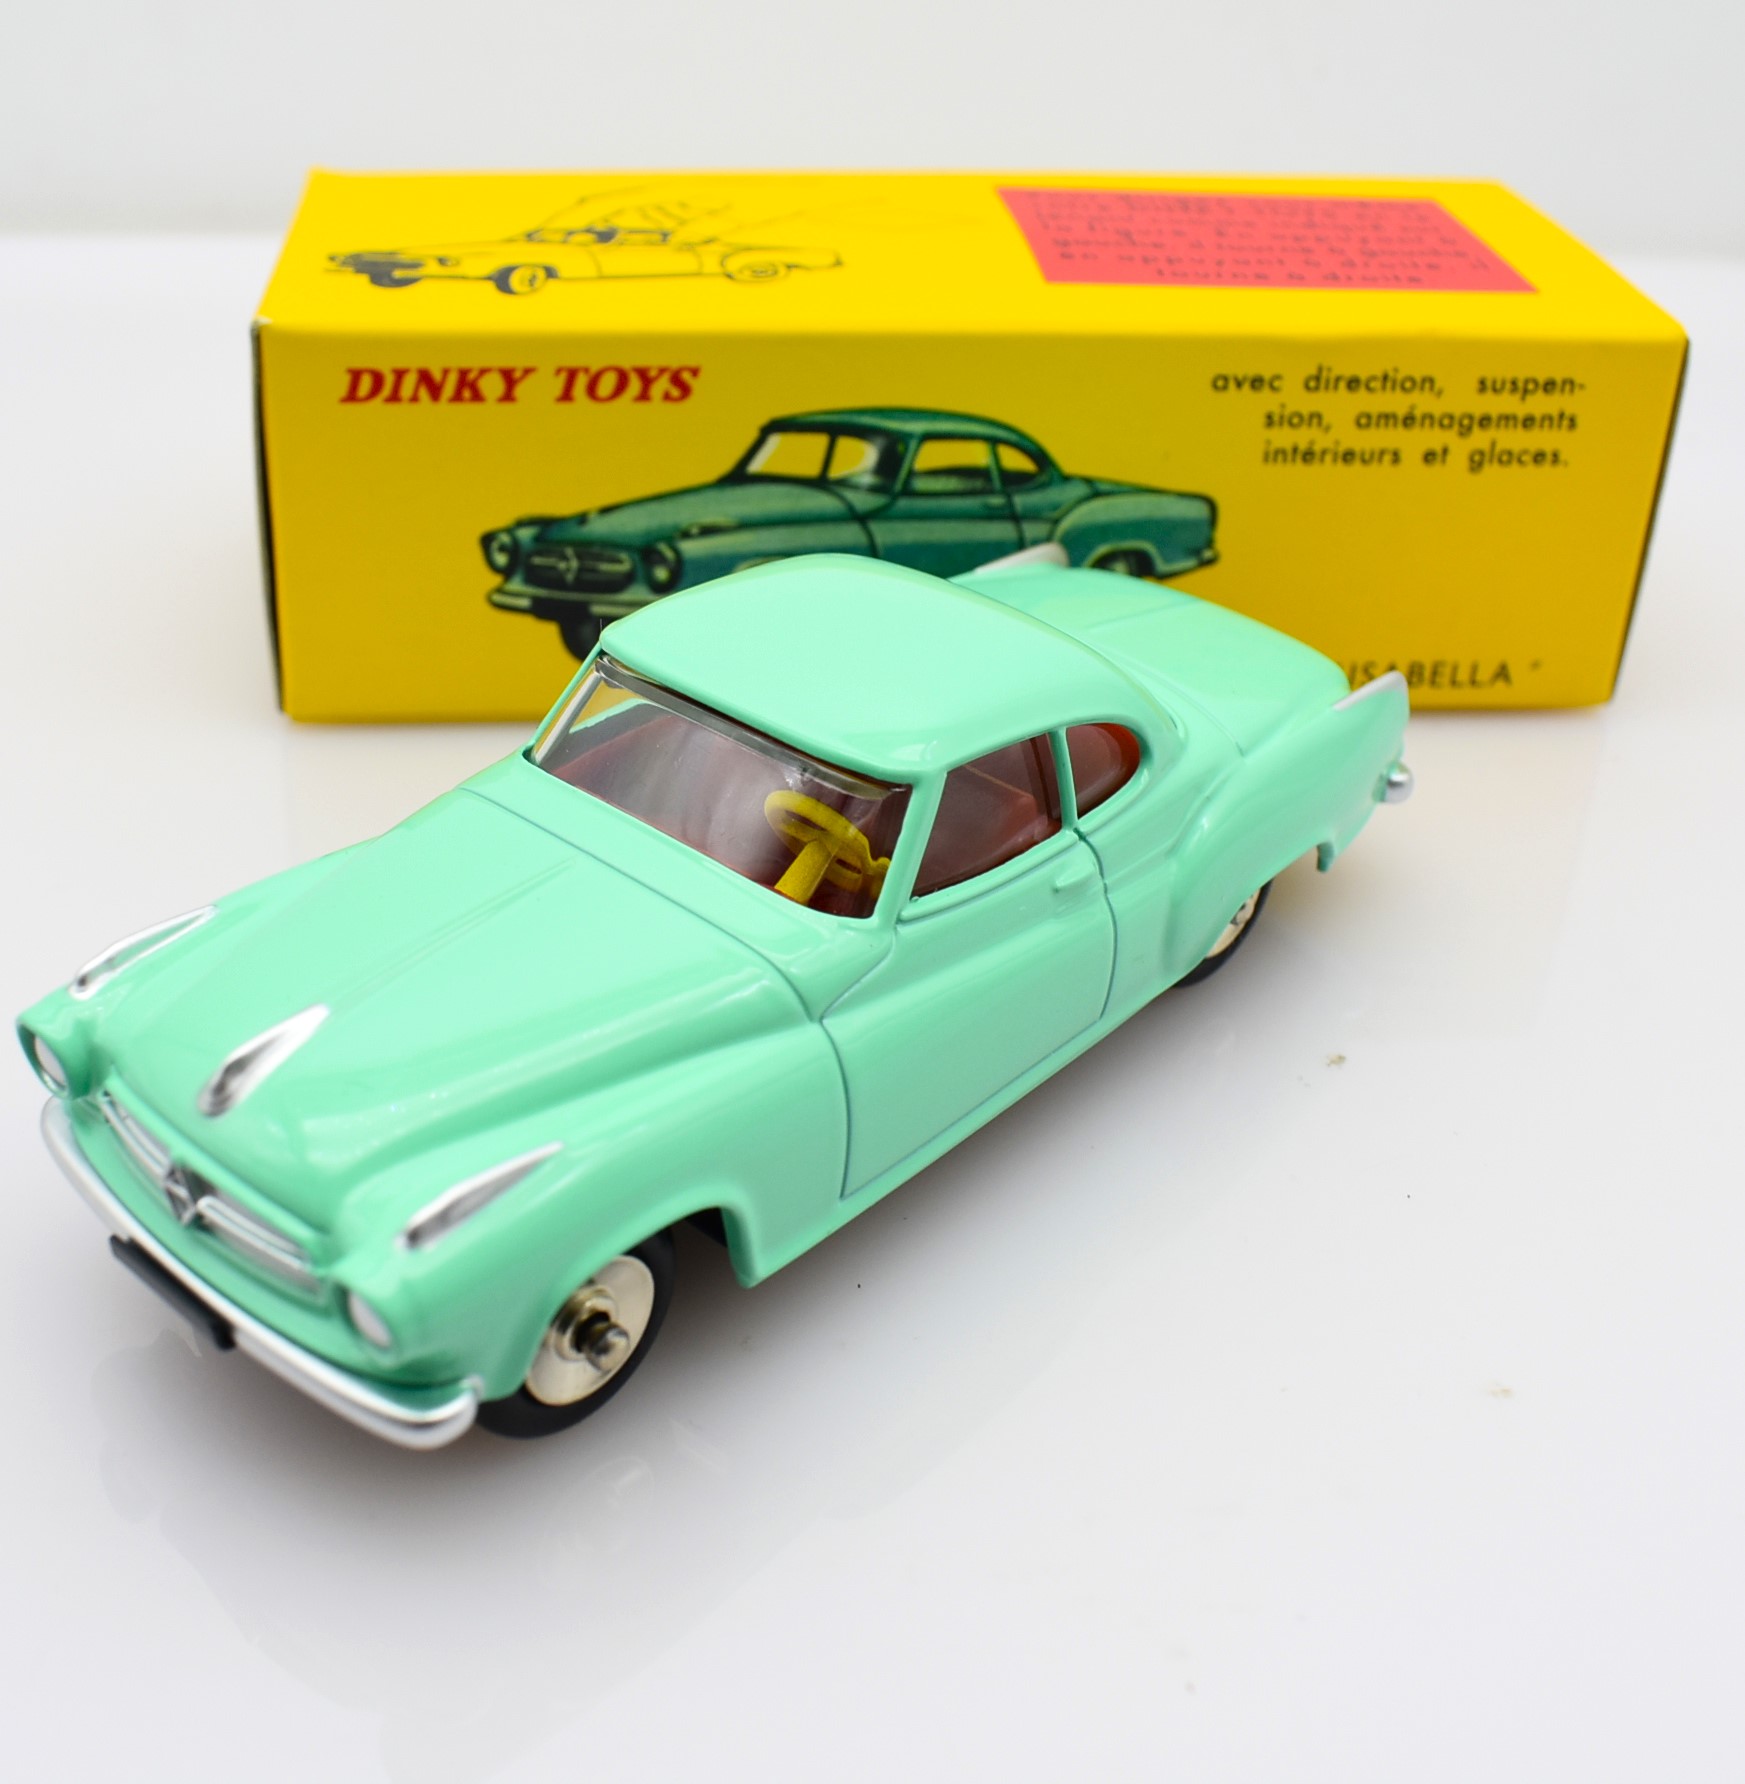 DINKY toys model car 1:43 scale Borgward Coupe Isabella vehiclesroad